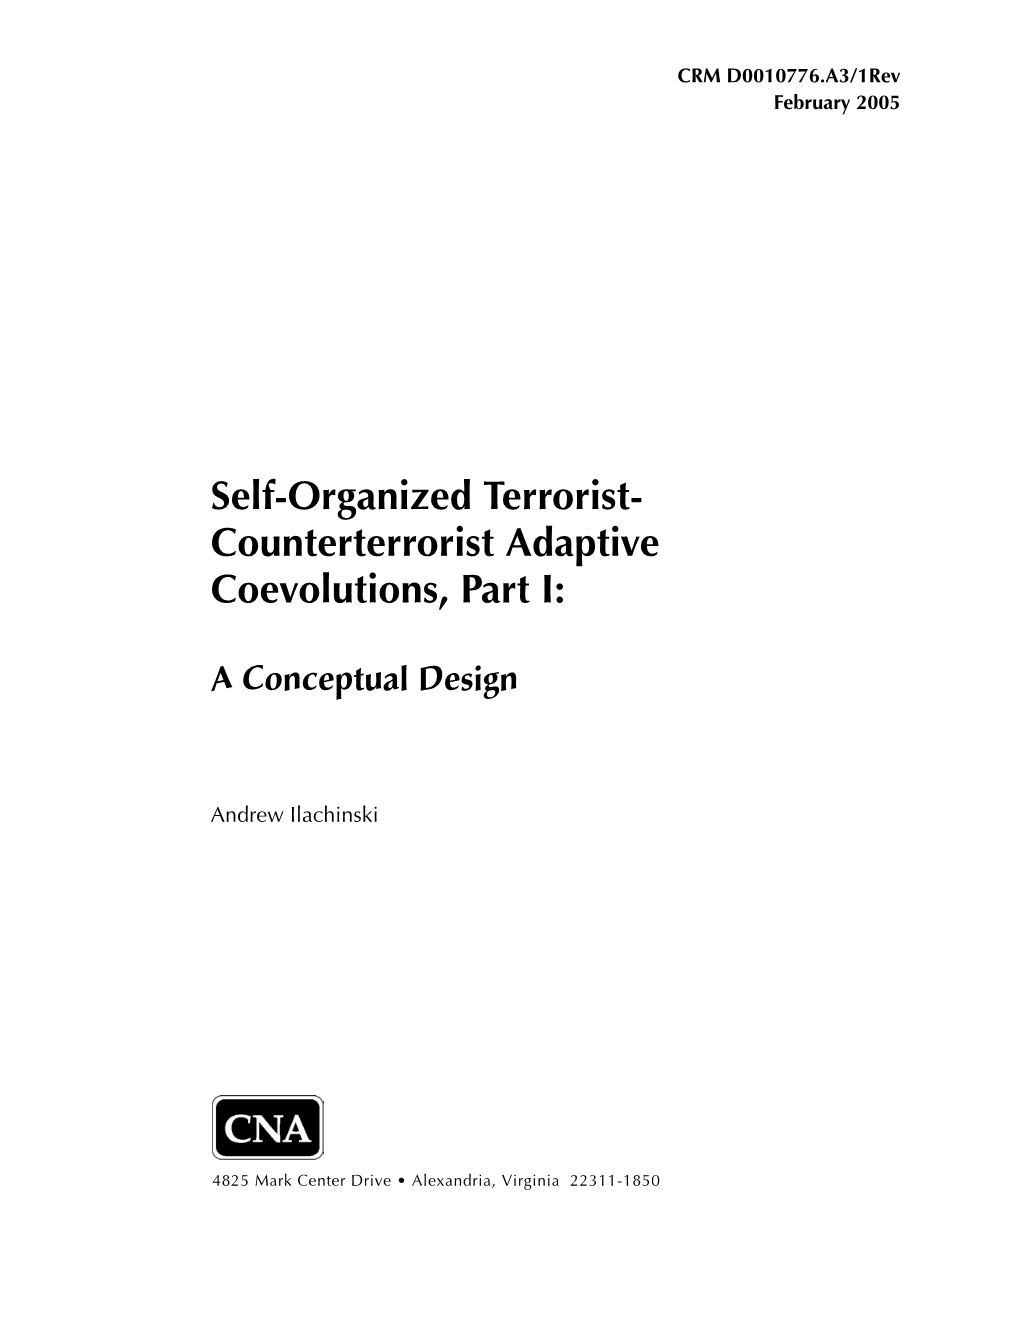 Self-Organized Terrorist- Counterterrorist Adaptive Coevolutions, Part I